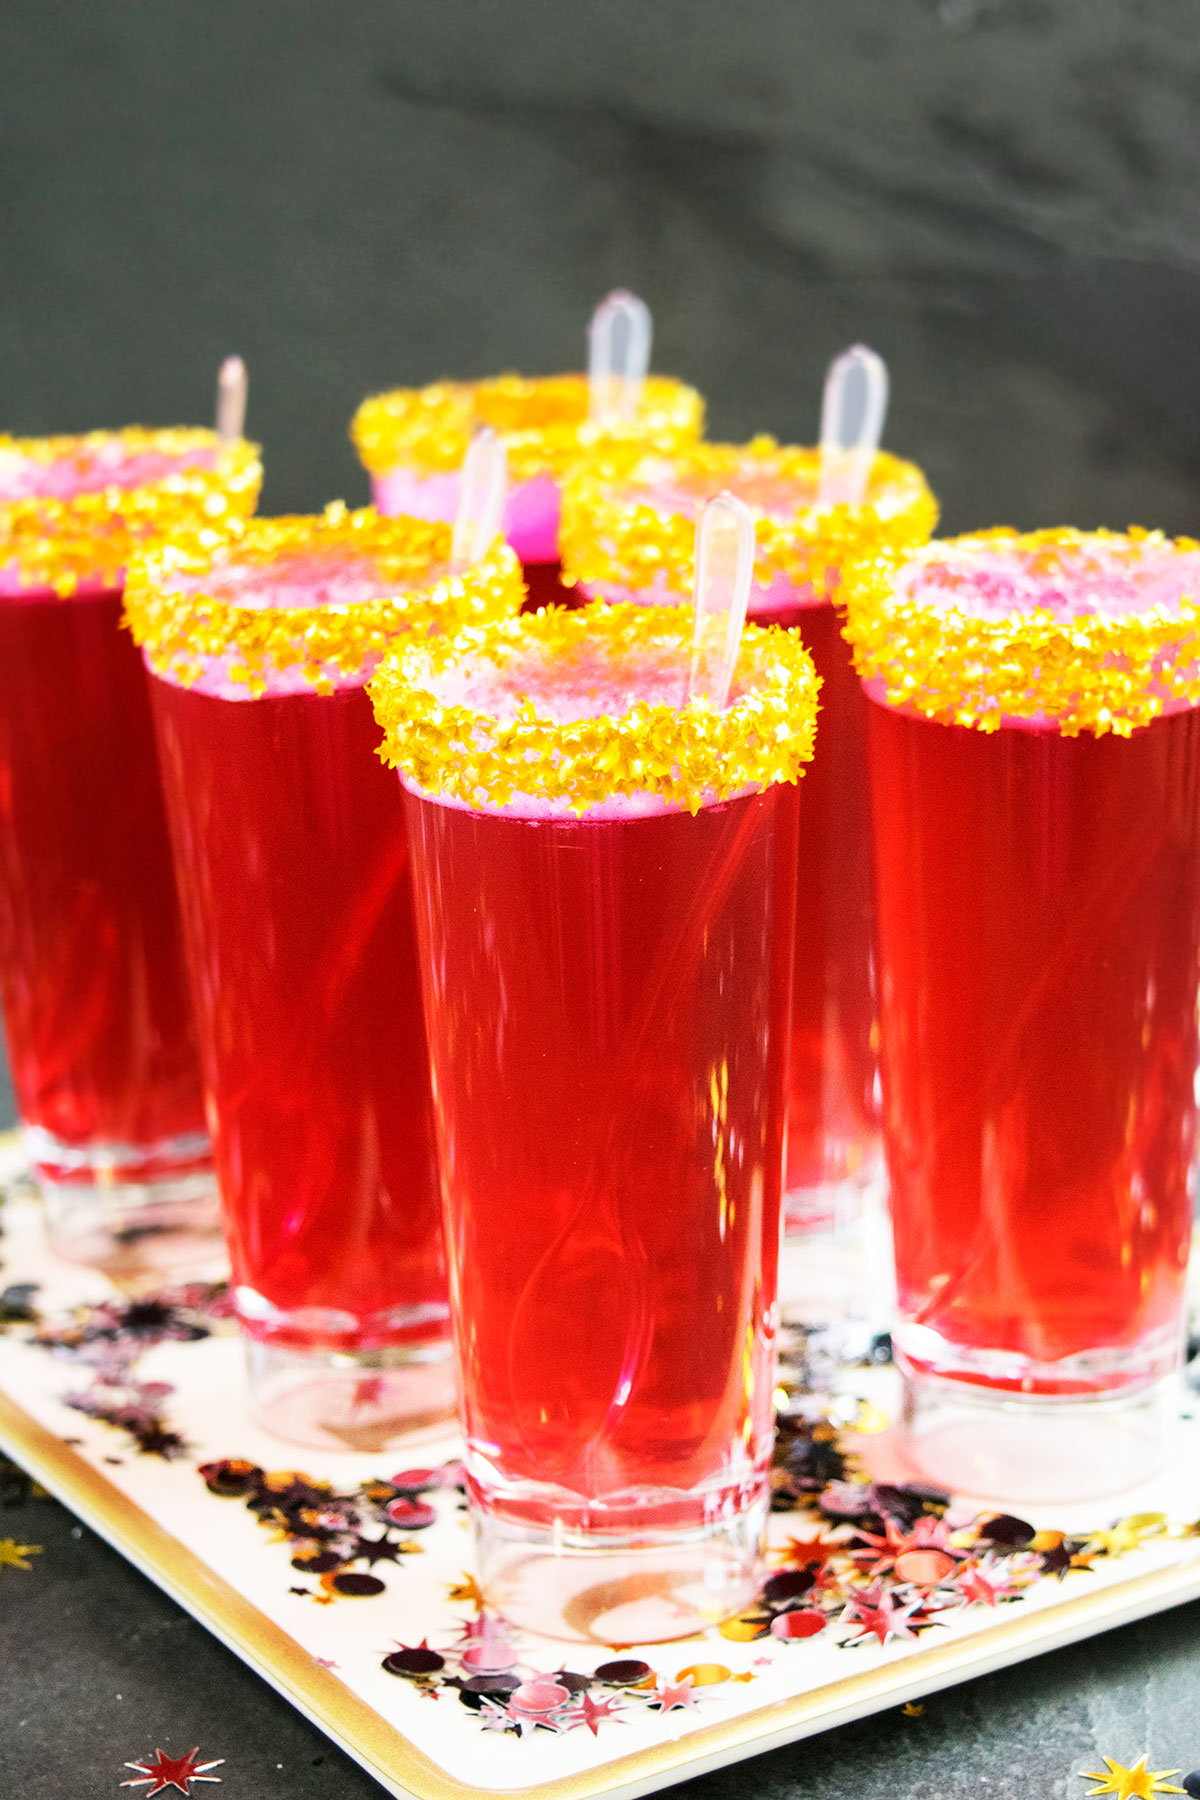 Easy Champagne Jello Shots (Jelly Shots) on Tray With Confetti.